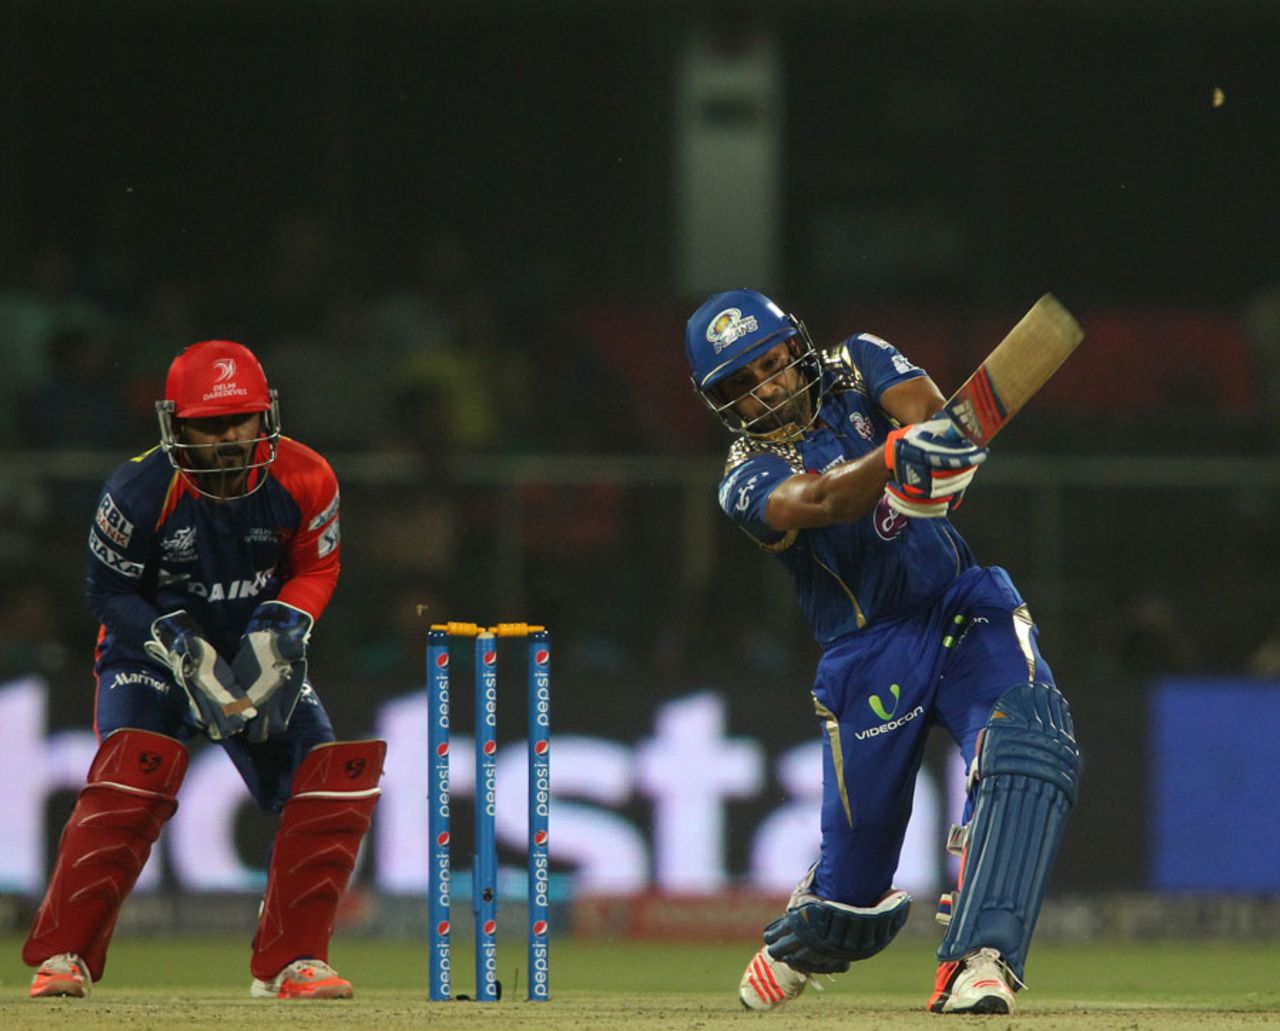 Rohit Sharma goes on the attack, Delhi Daredevils v Mumbai Indians, IPL 2015, Delhi, April 23, 2015